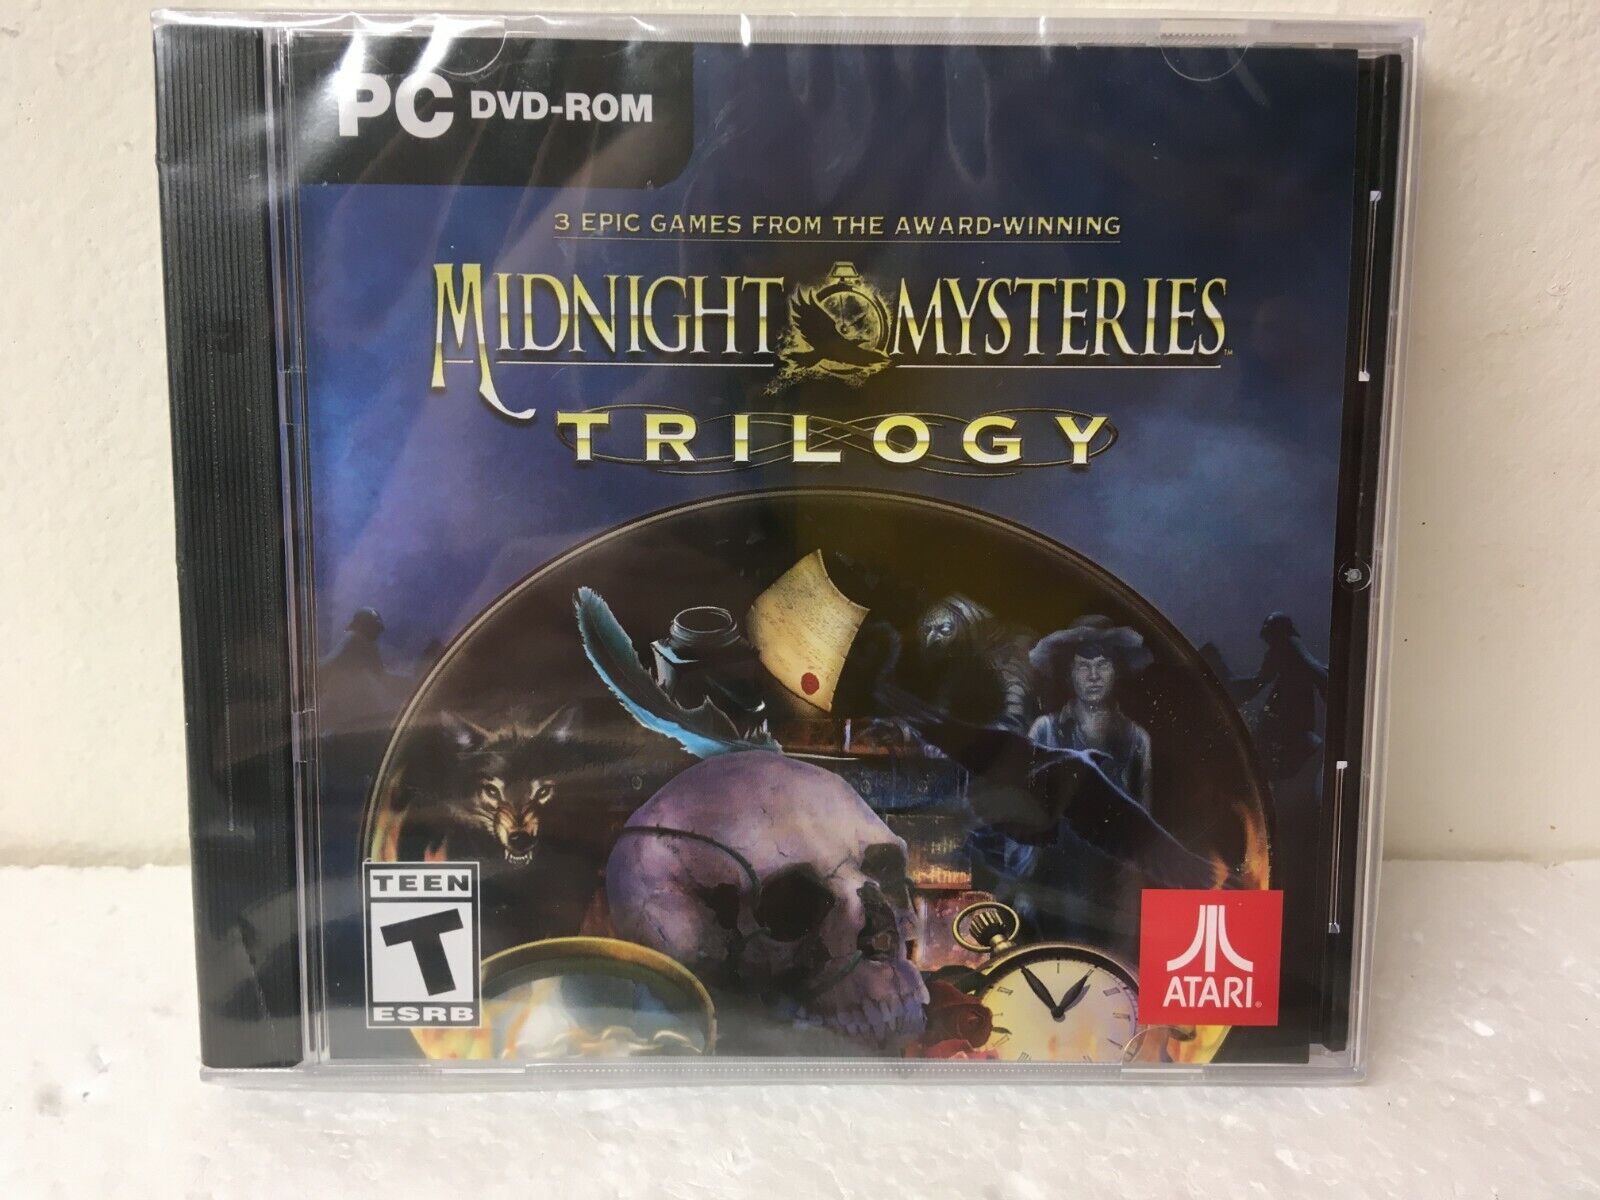 NEW Midnight Mysteries : Trilogy ATARI [PC DVD-ROM] 3 HIDDEN OBJECTS GAMES